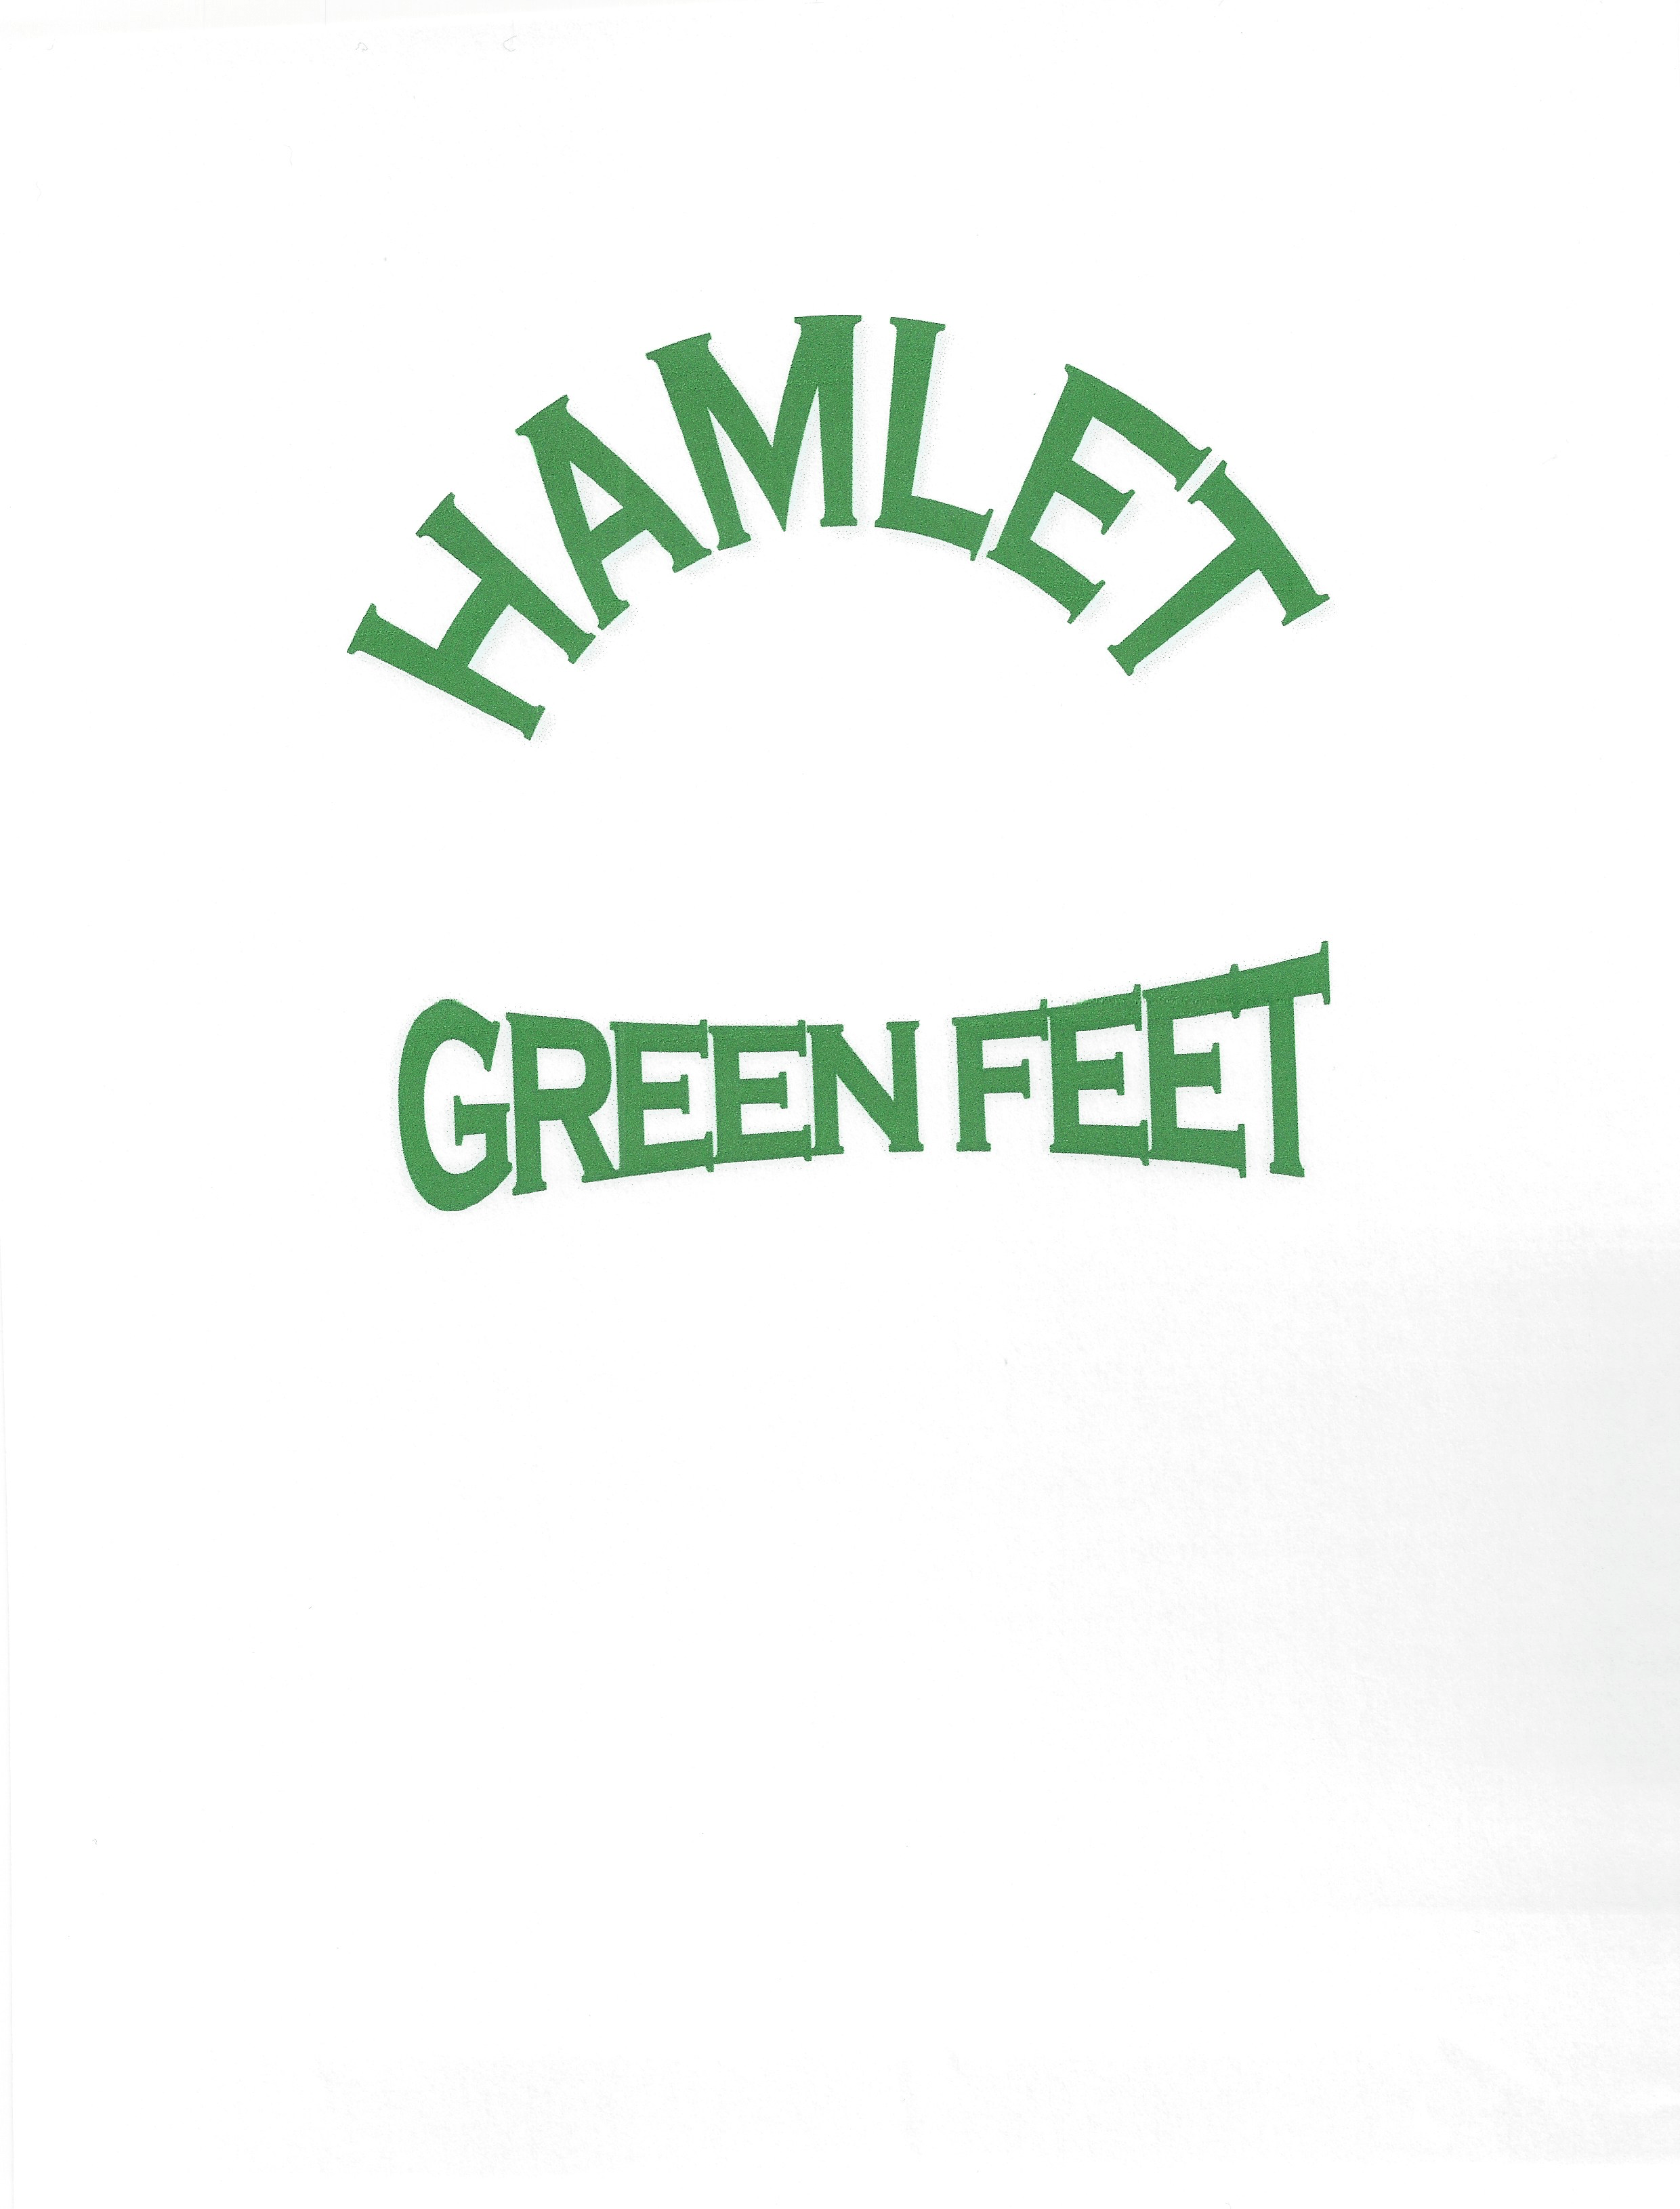 Hamlet Logo - Hamlet Logo Words Only | Free Images at Clker.com - vector clip art ...